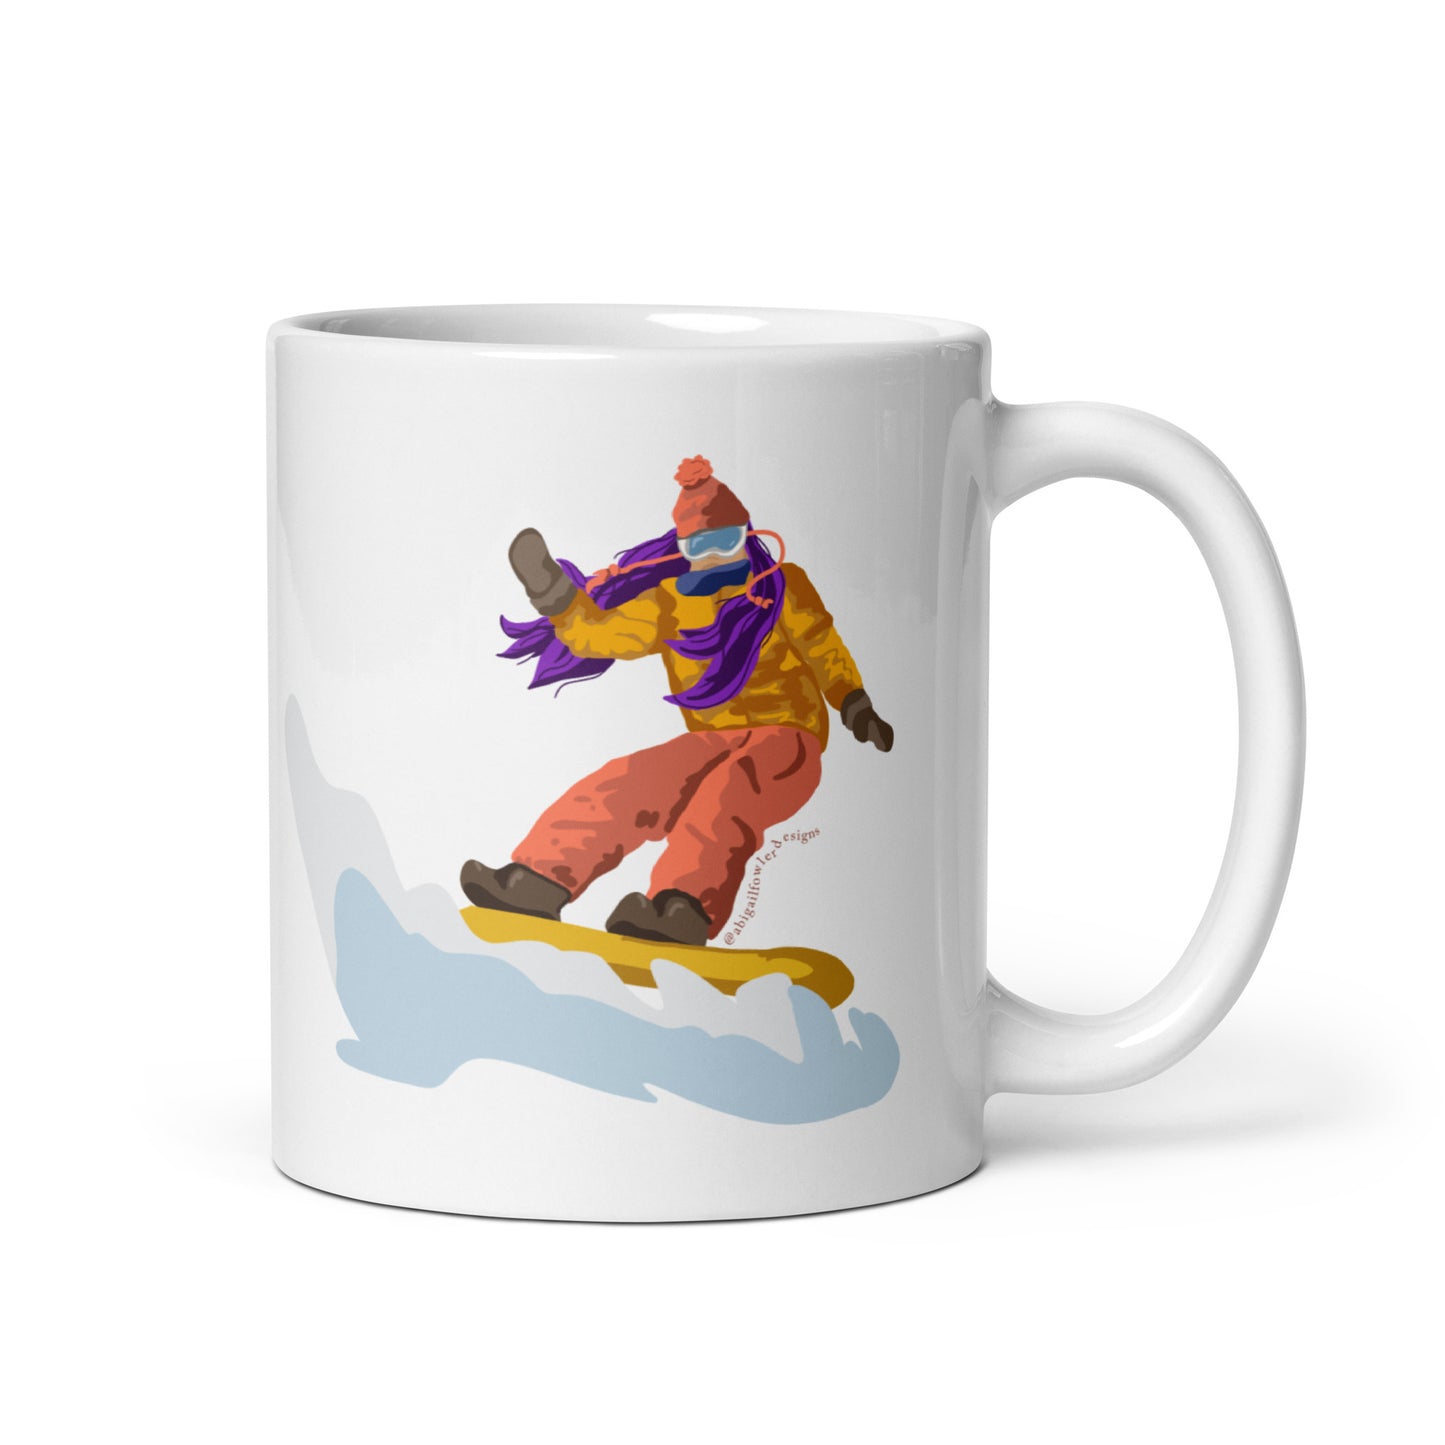 Tan and Purple Hair Snowboarder White glossy mug